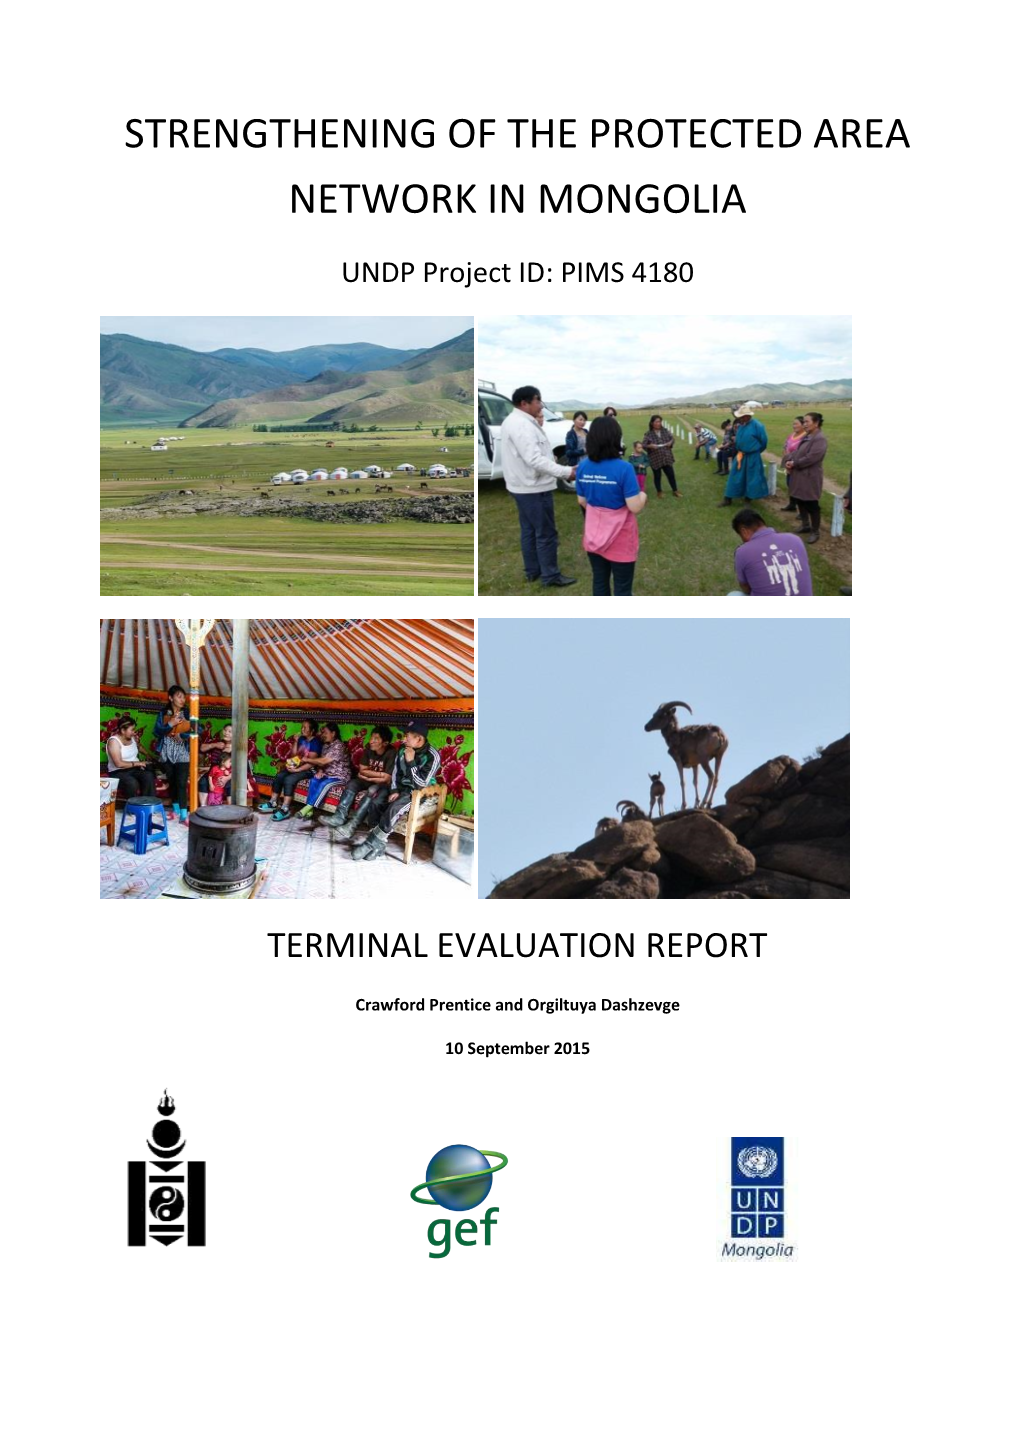 SPAN Mongolia – Terminal Evaluation Report I